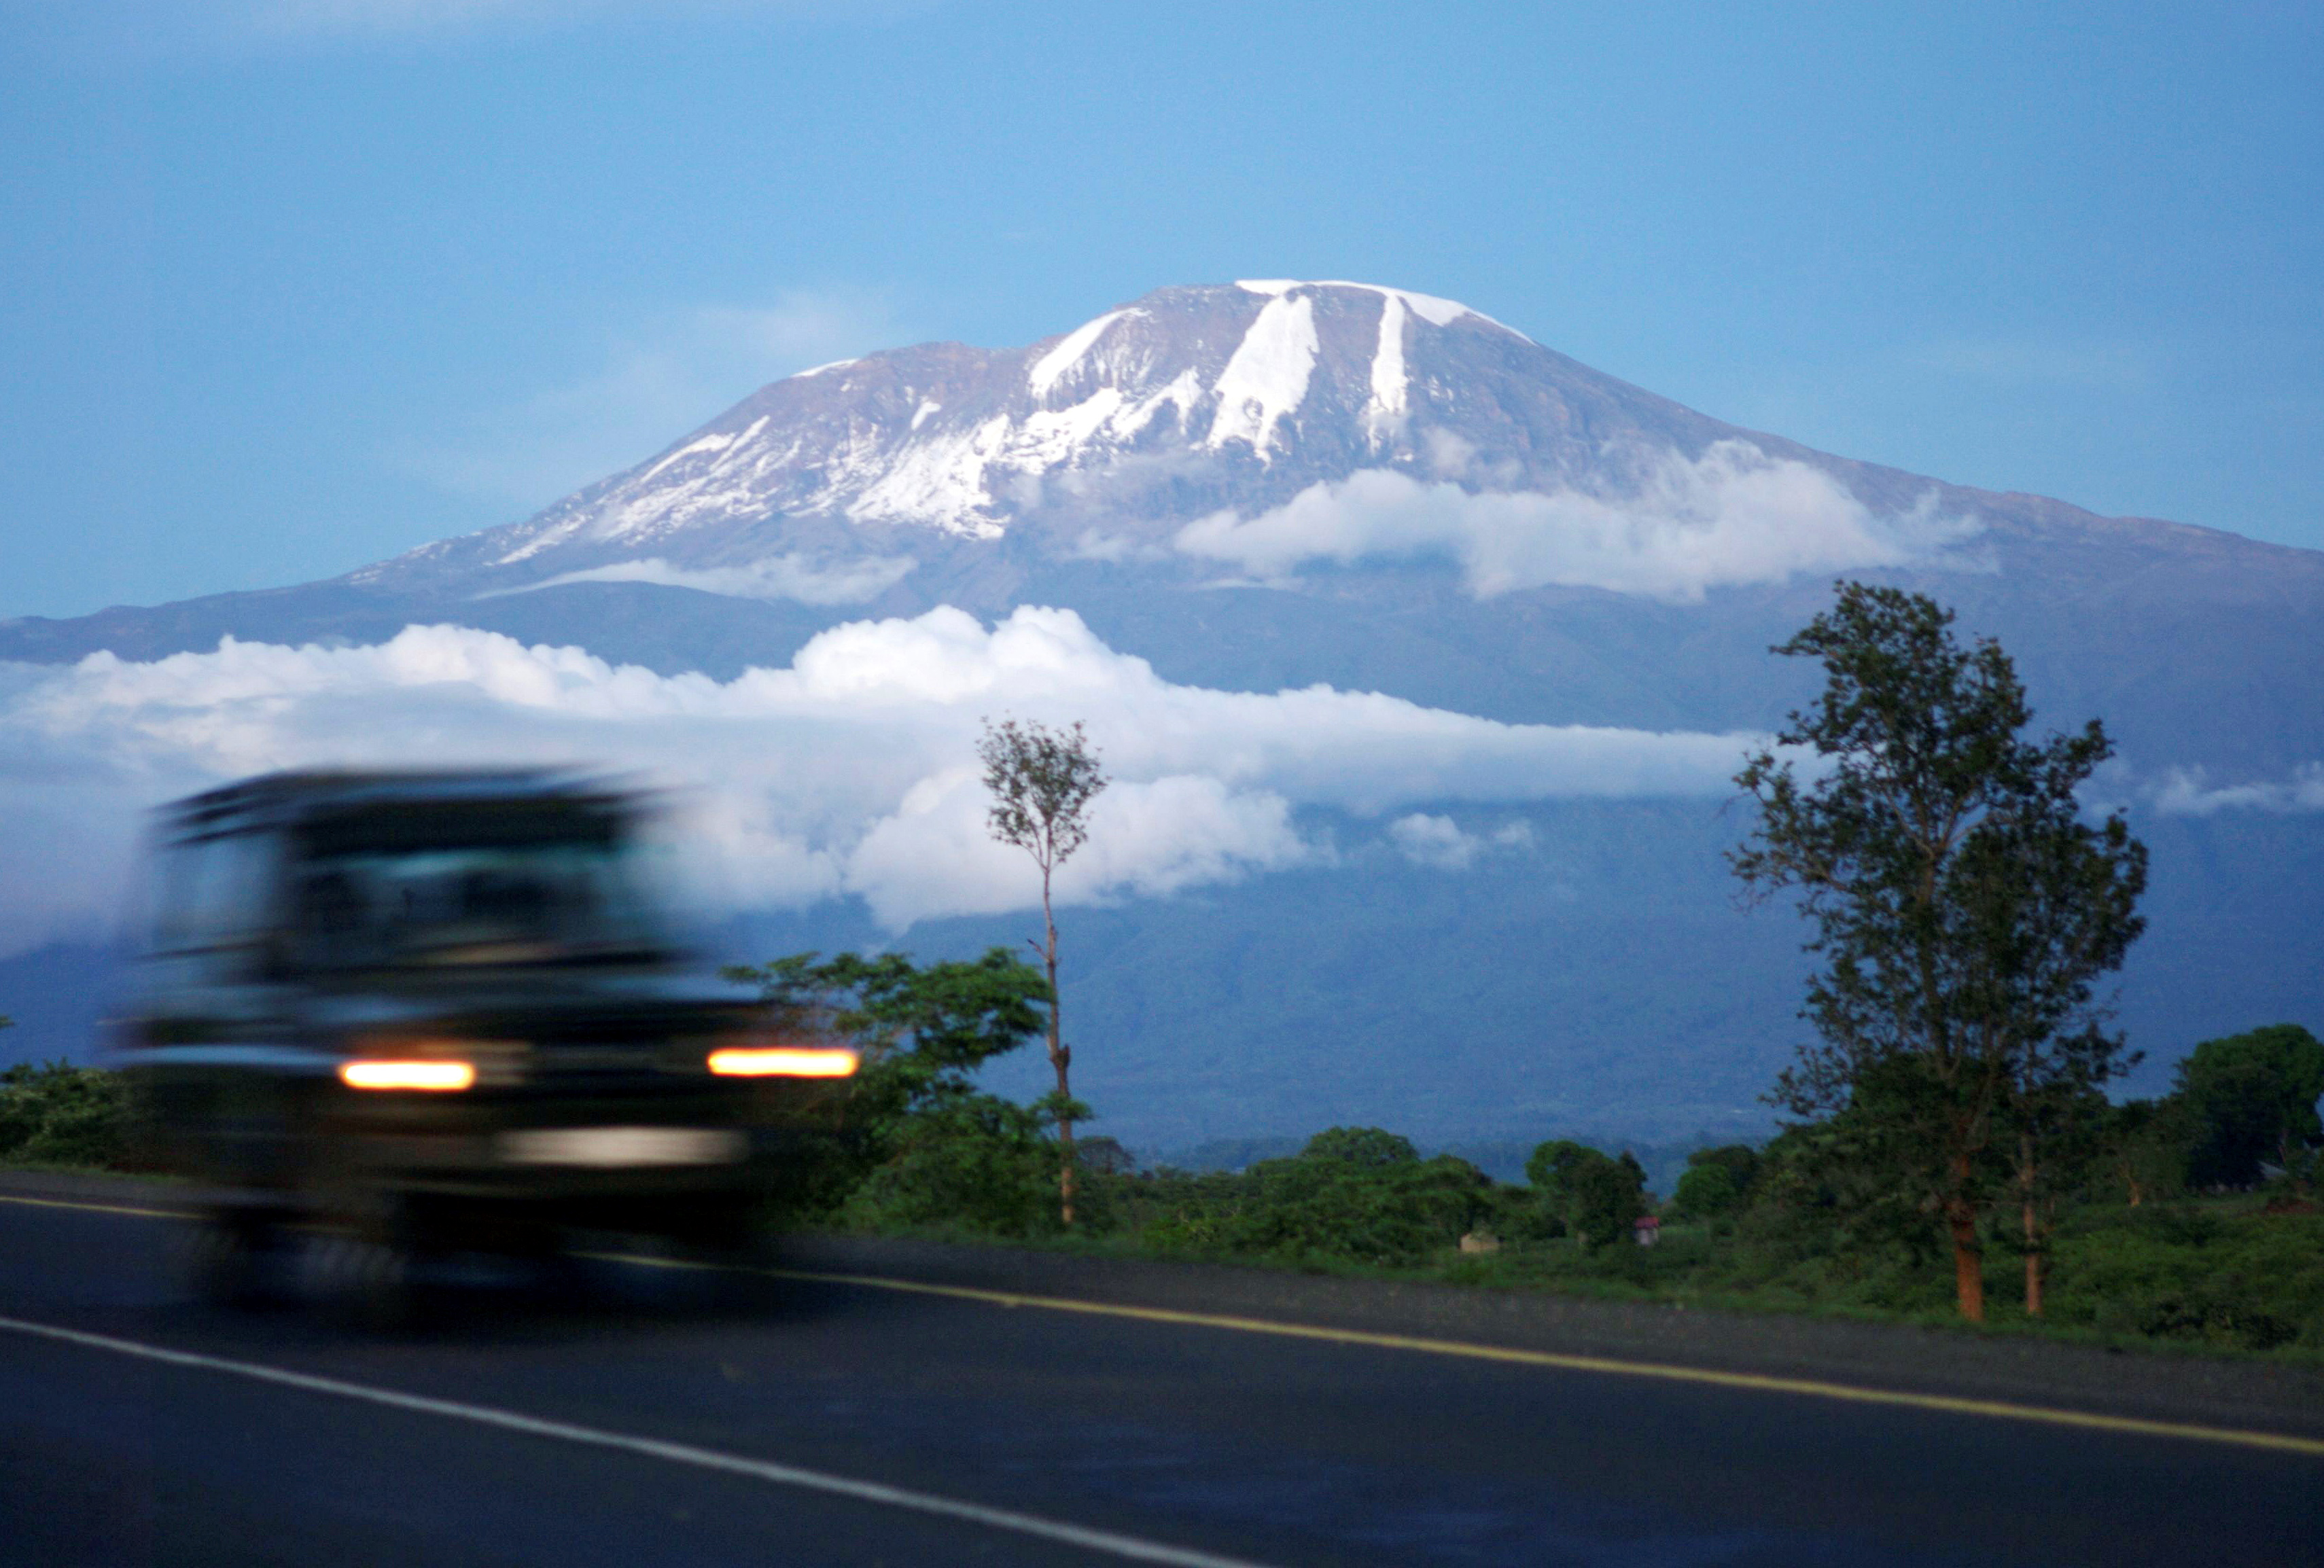  A vehicle drives past Mount Kilimanjaro in Tanzania's Hie district, file.  REUTERS/Katrina Manson  